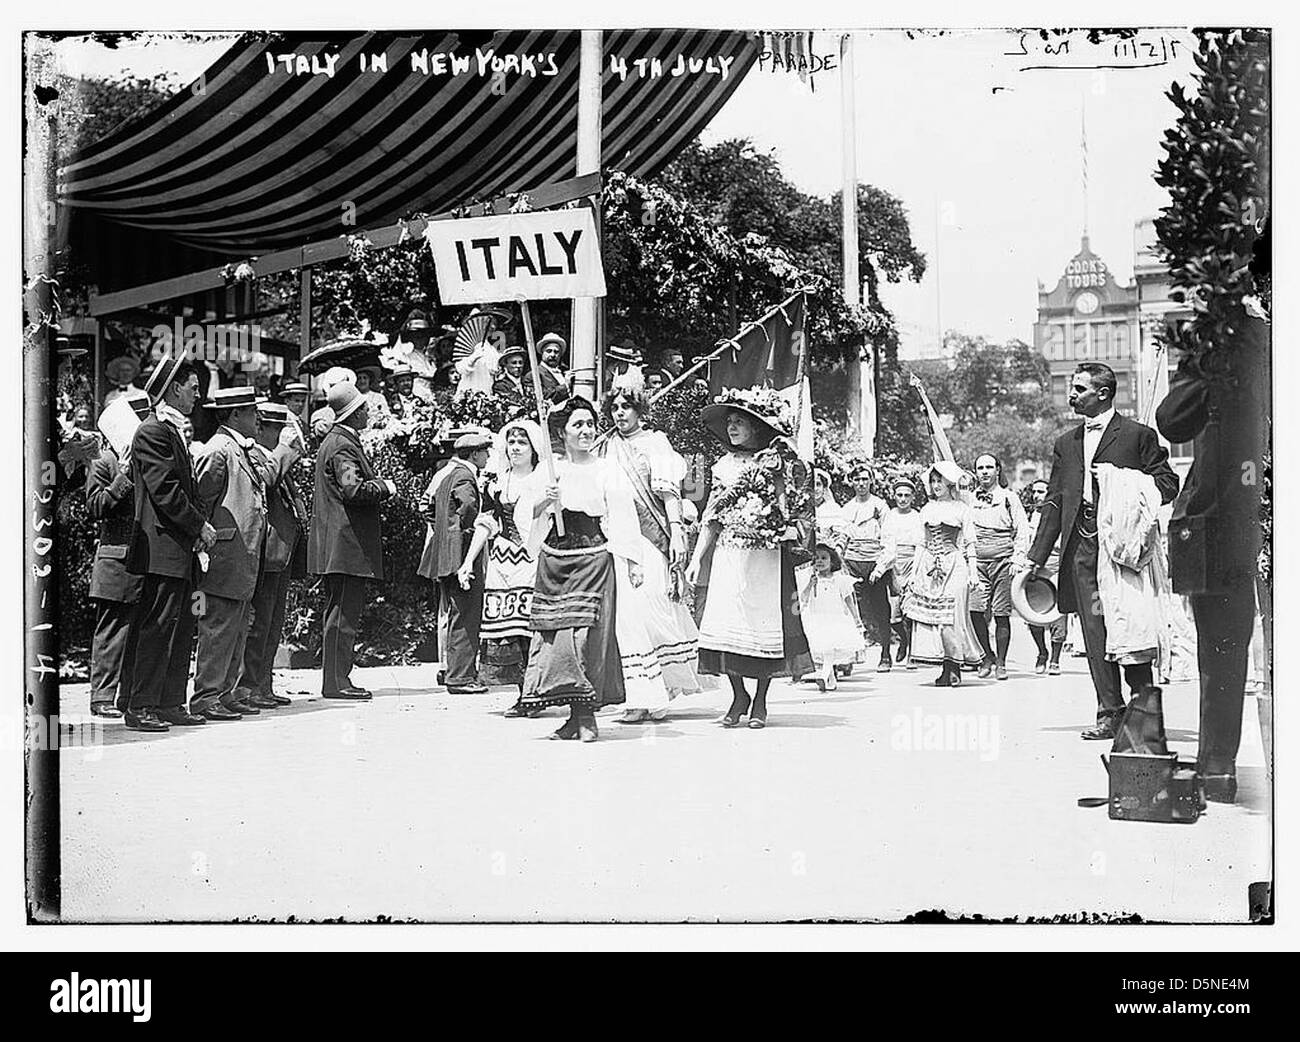 Italien in N.Y. 4. Juli parade (LOC) Stockfoto